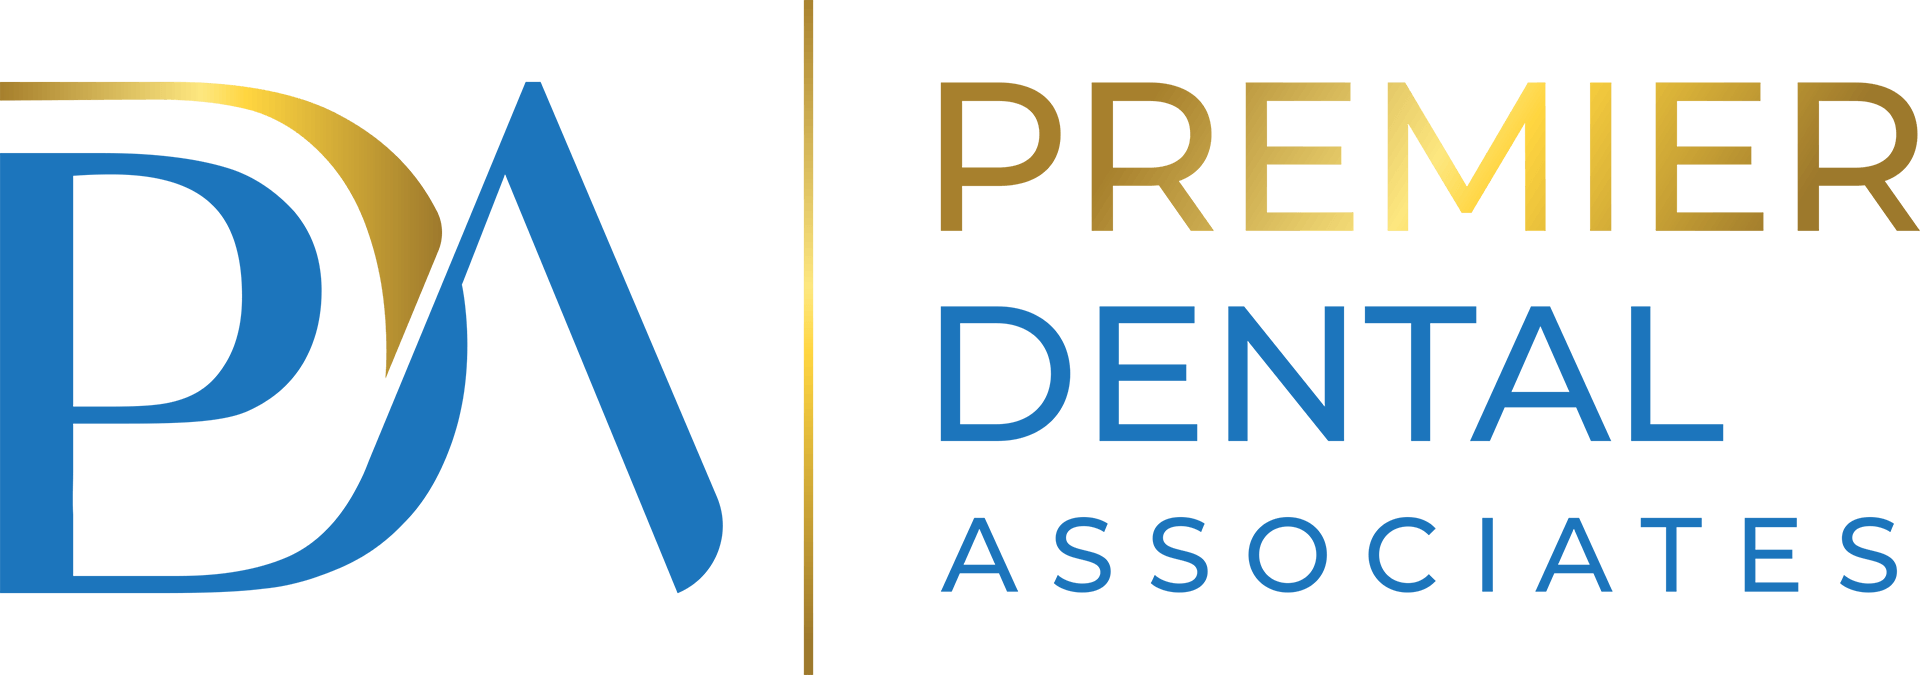 Premier Dental Associates logo